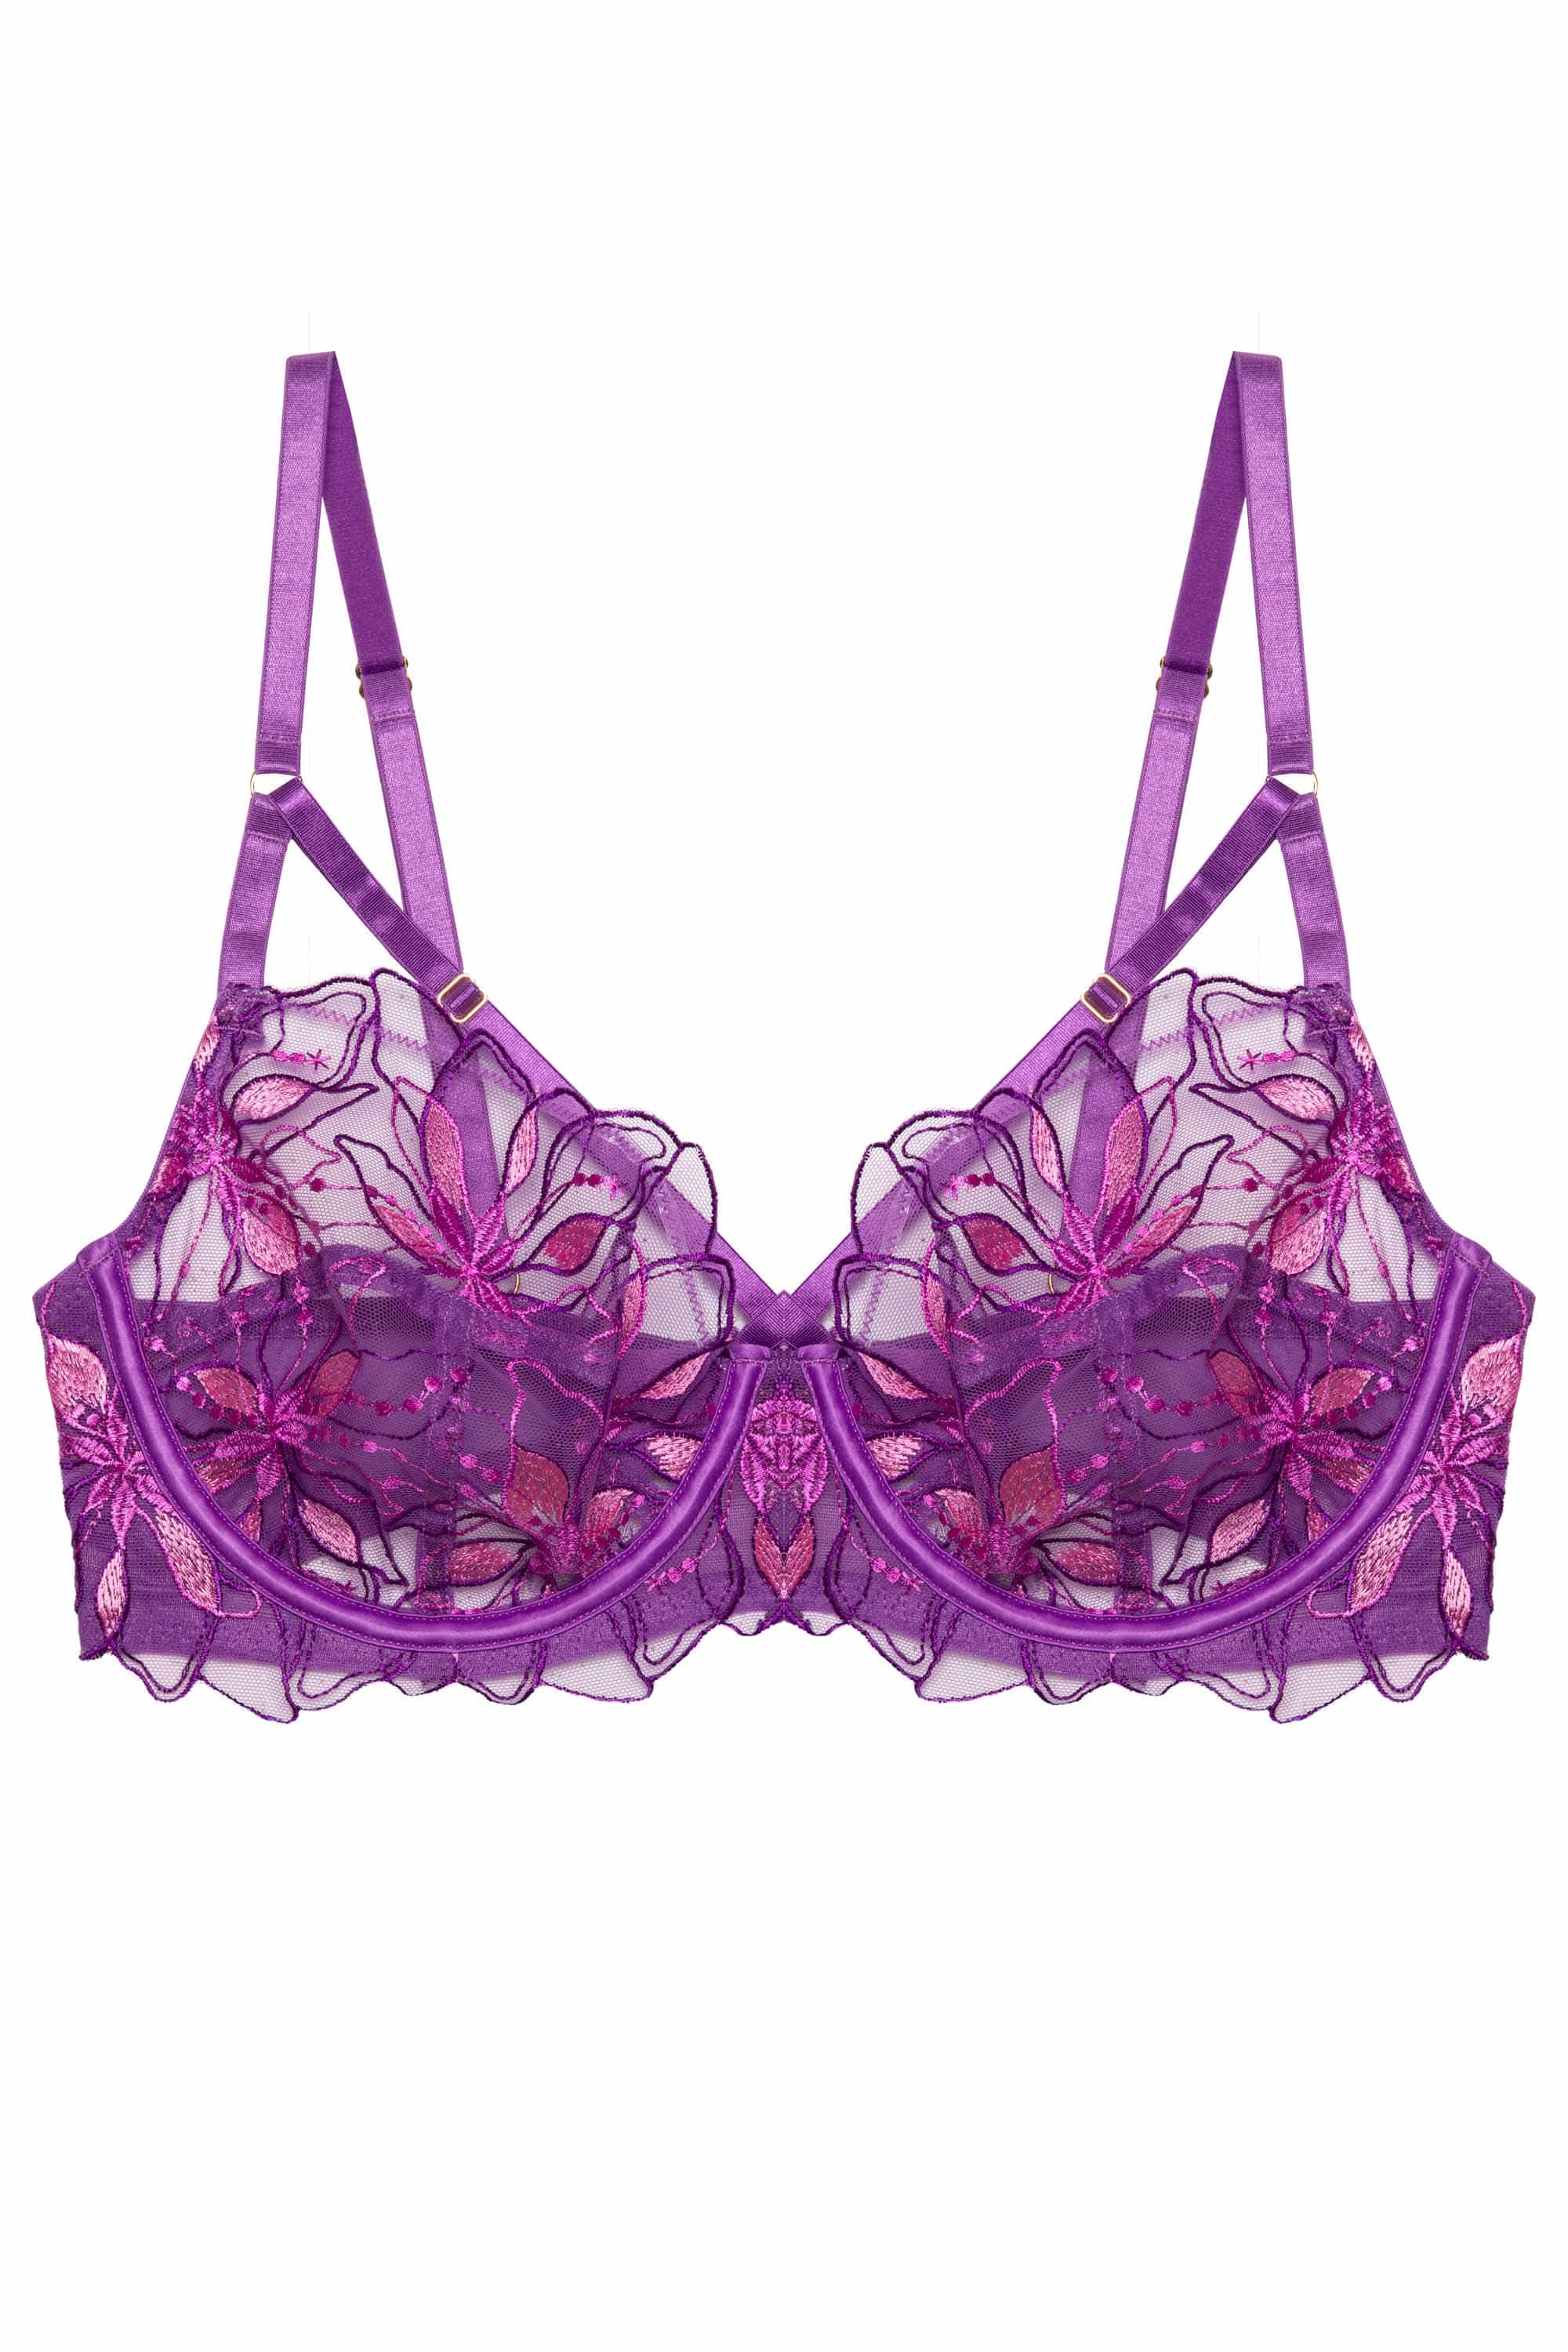 Balconette Padded Bra~44DDD. NWT  Fashion bug, Purple bras, Pink ladies